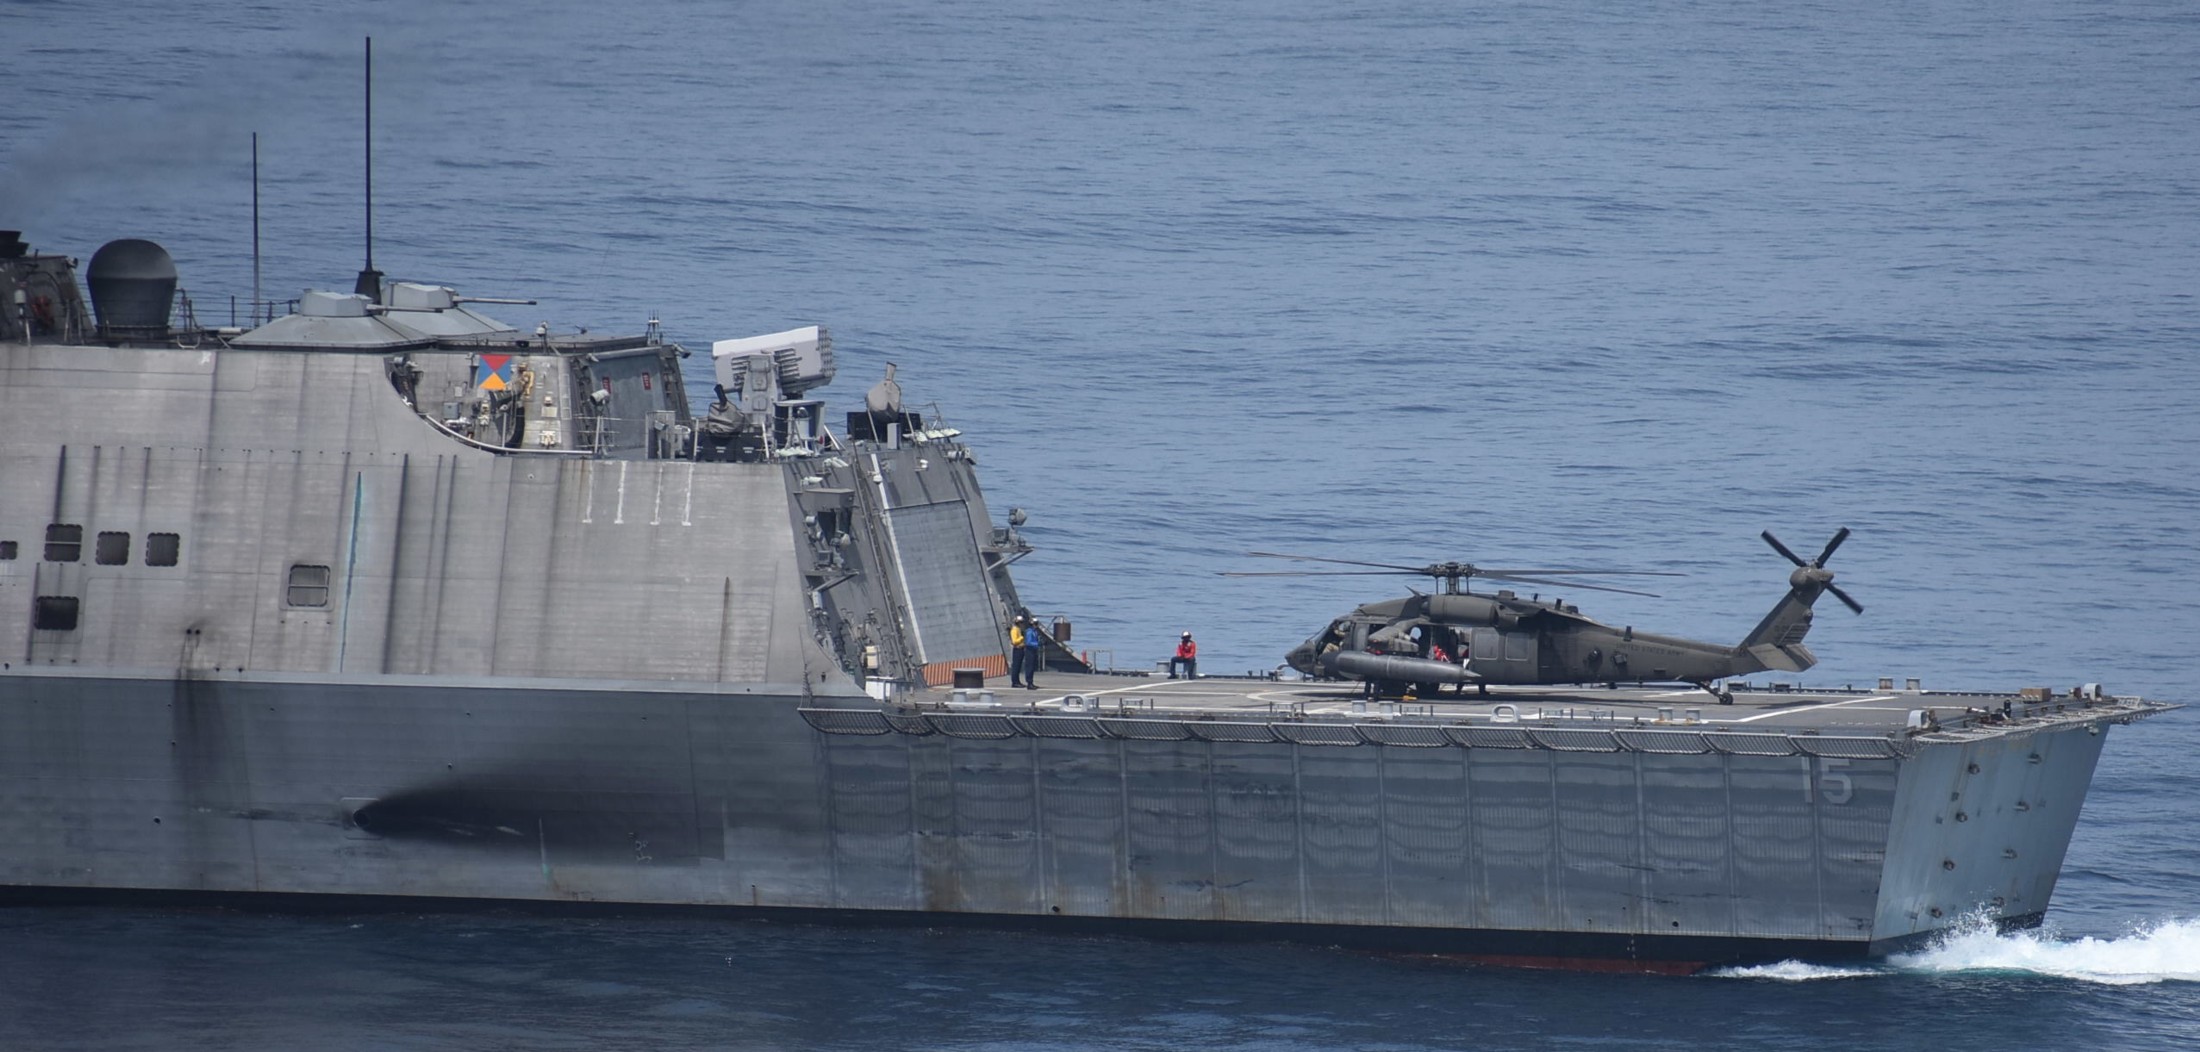 lcs-15 uss billings freedom class littoral combat ship us navy army uh-60 blackhawk 86